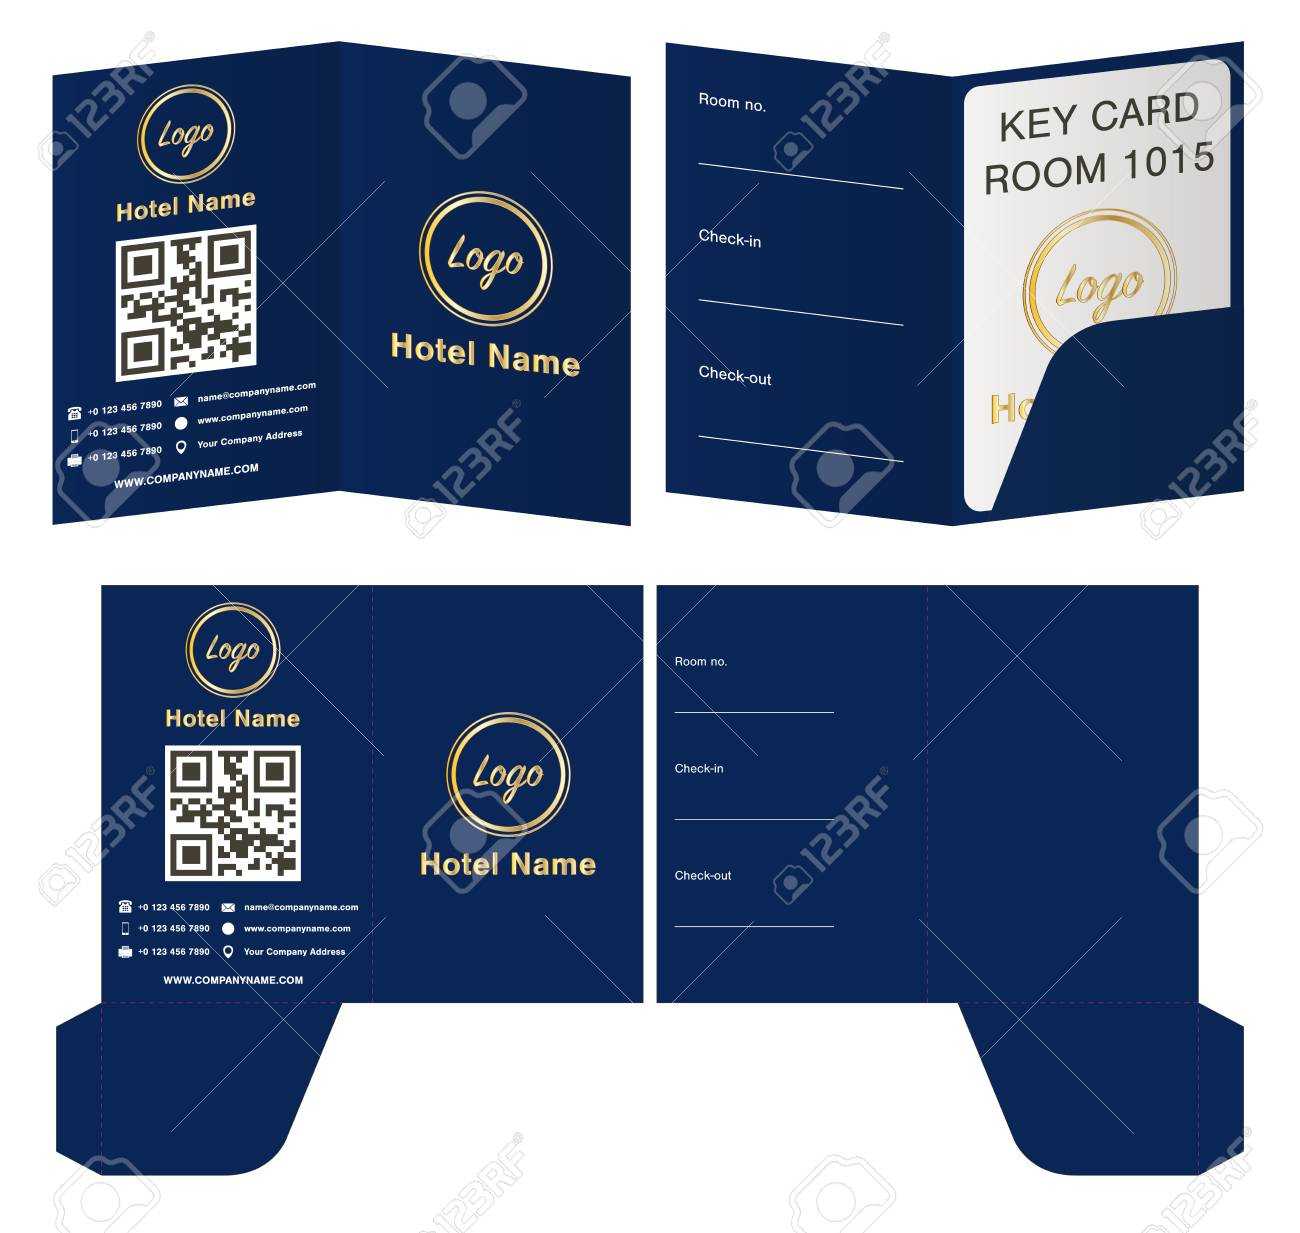 Hotel Key Card Holder Folder Package Template Design. In Hotel Key Card Template